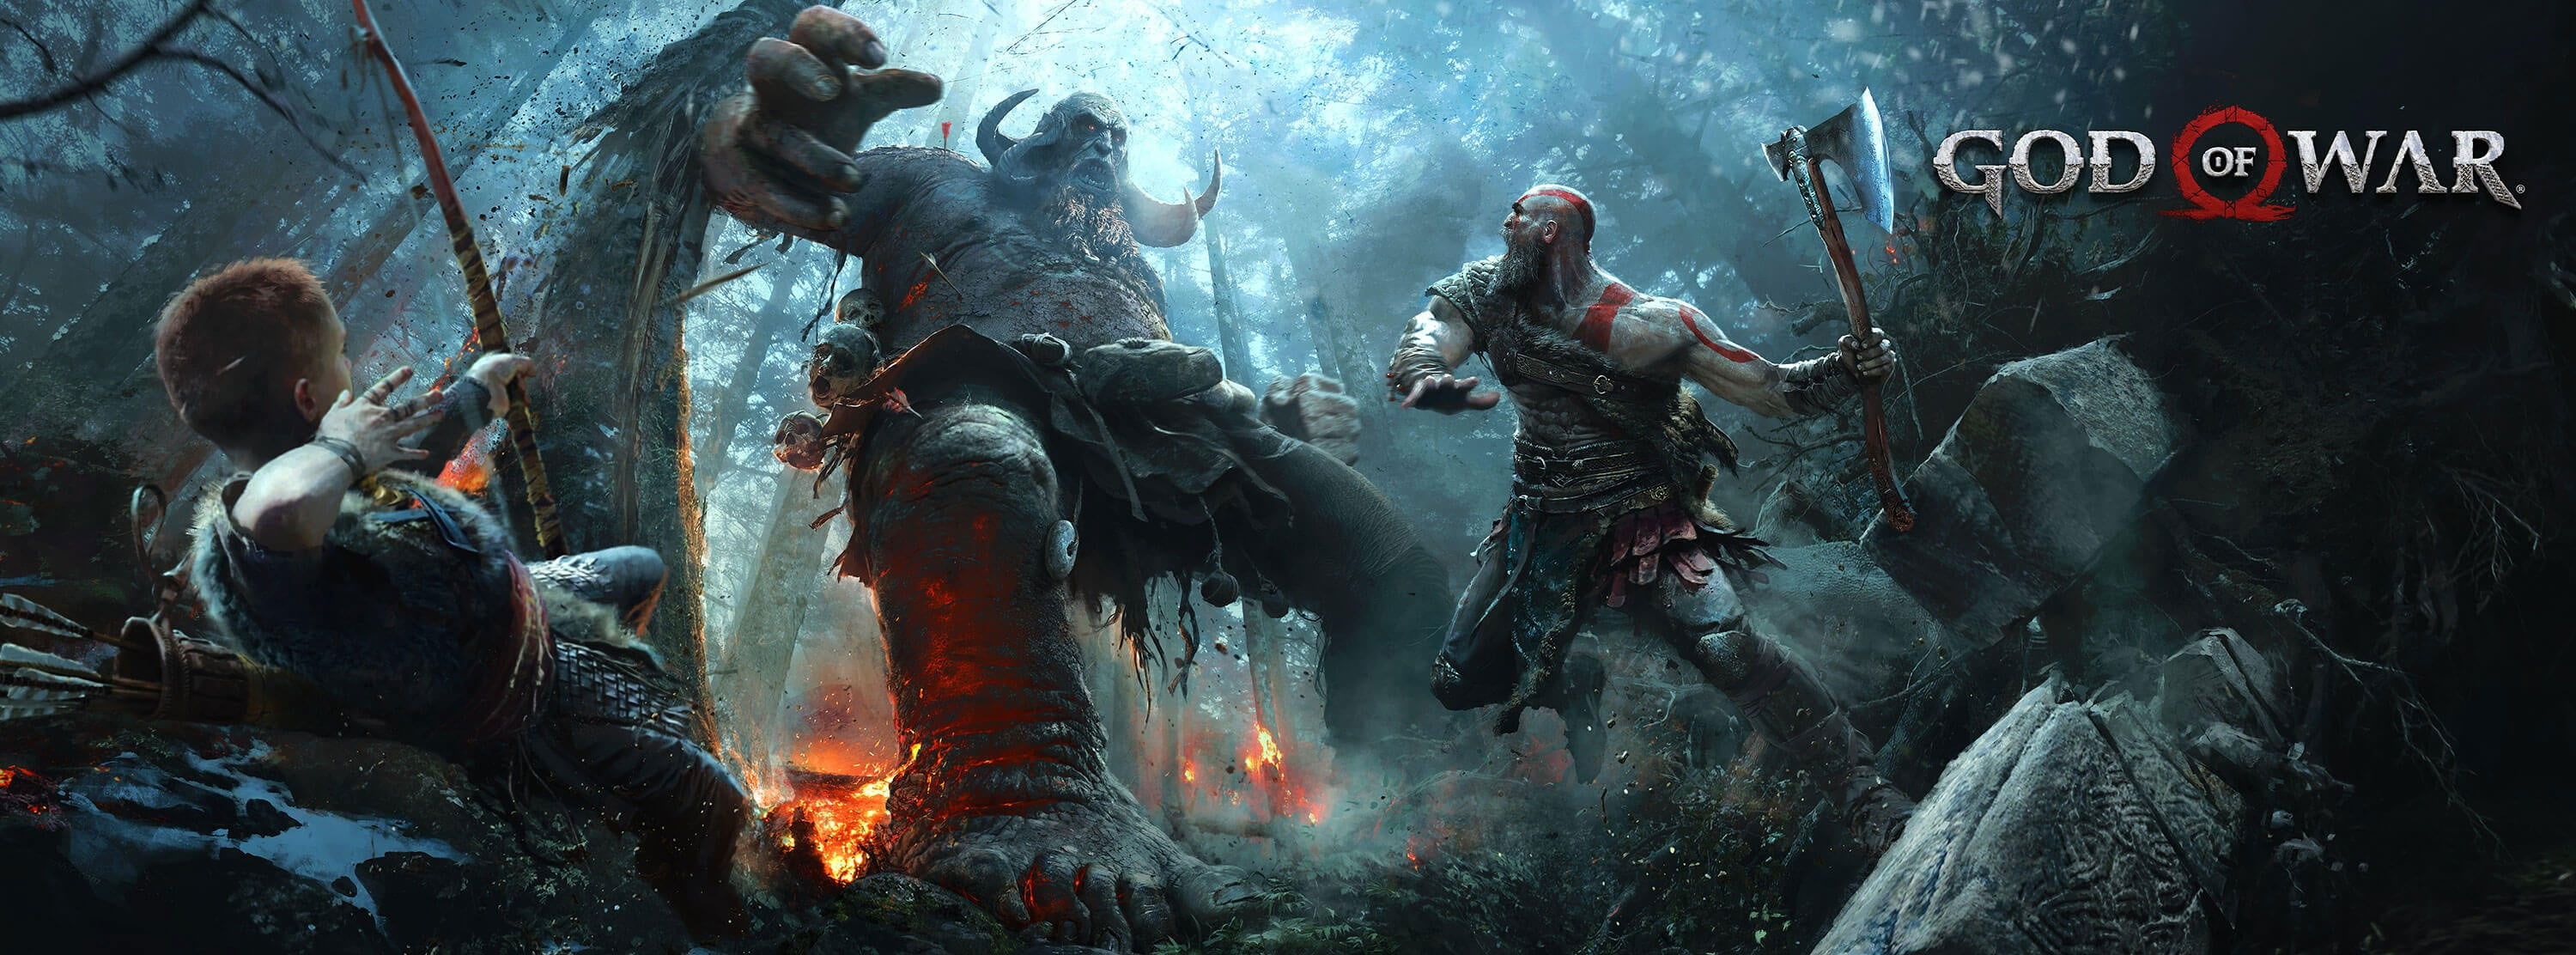 God Of War Digital Wallpaper, Kratos, God Of War, Game